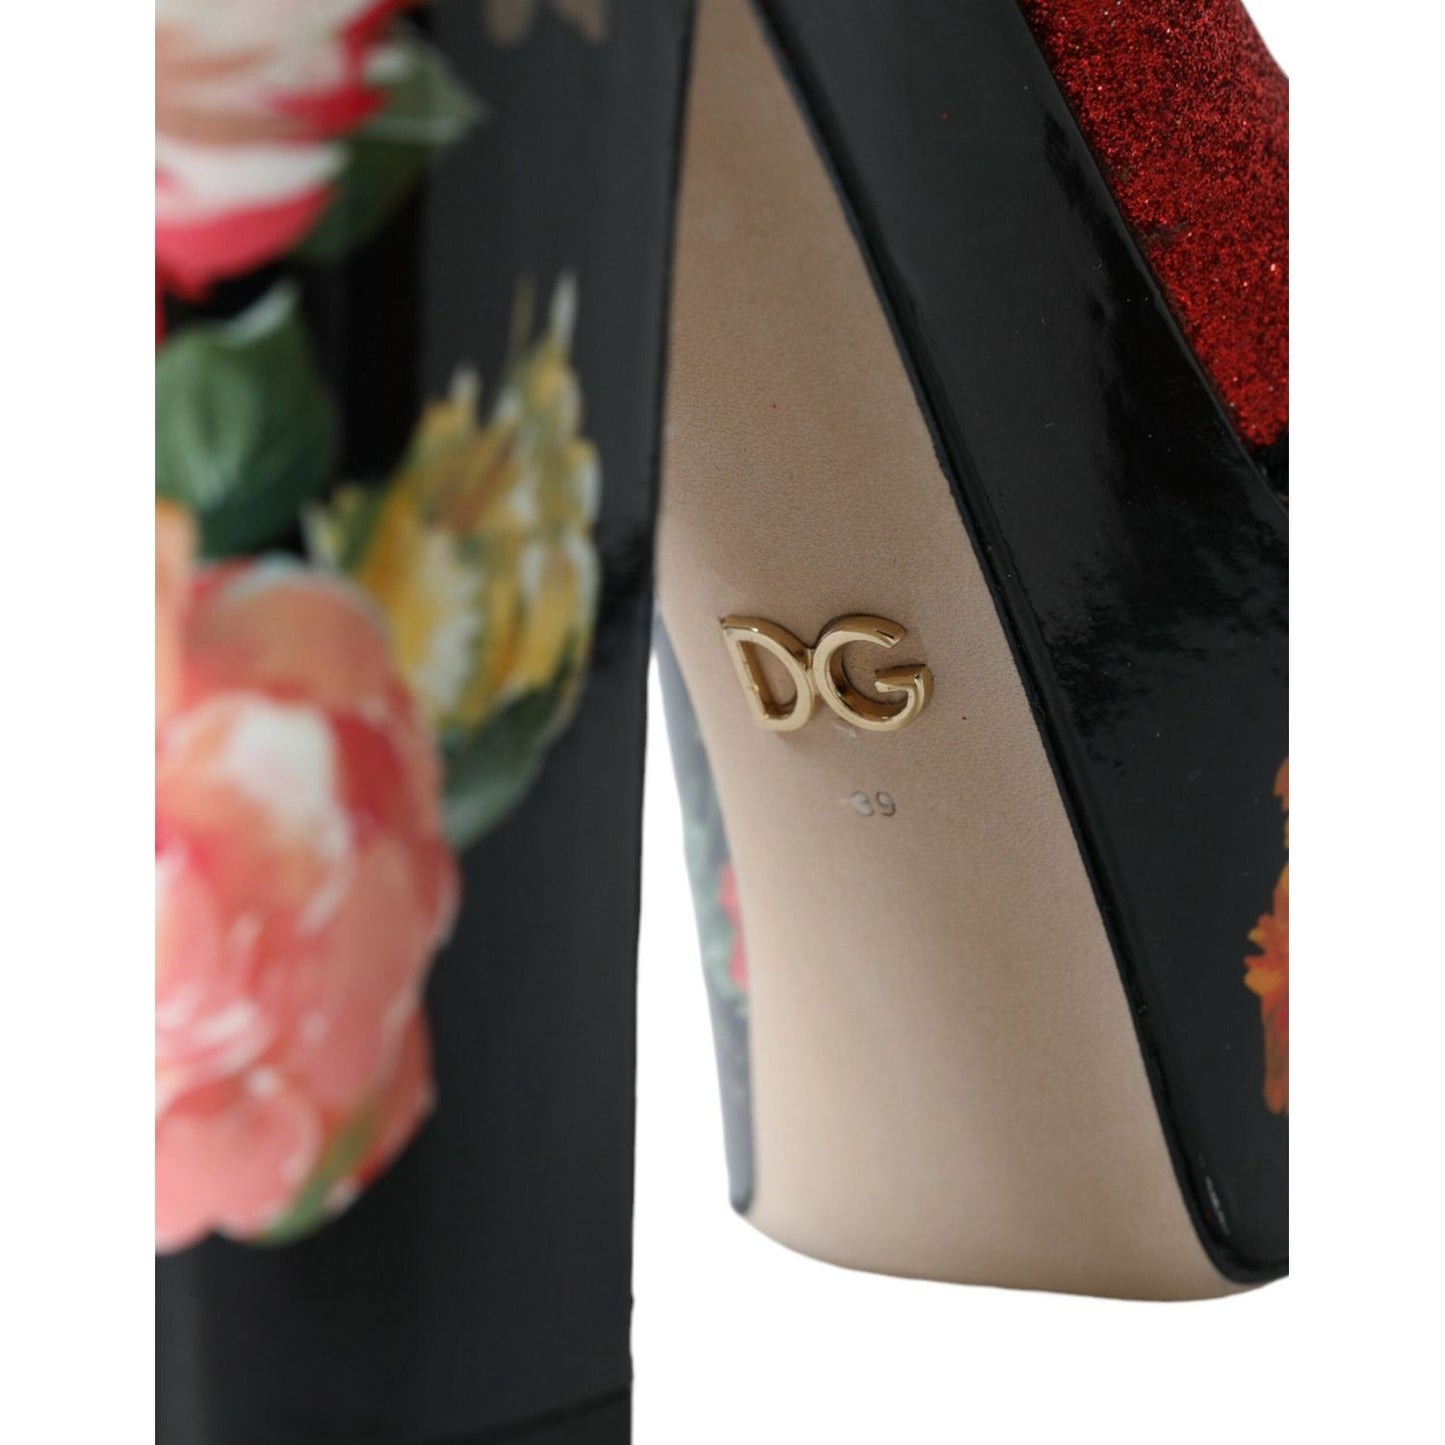 Dolce & Gabbana Multicolor Floral Crystal Platform Sandals Shoes multicolor-floral-crystal-platform-sandals-shoes